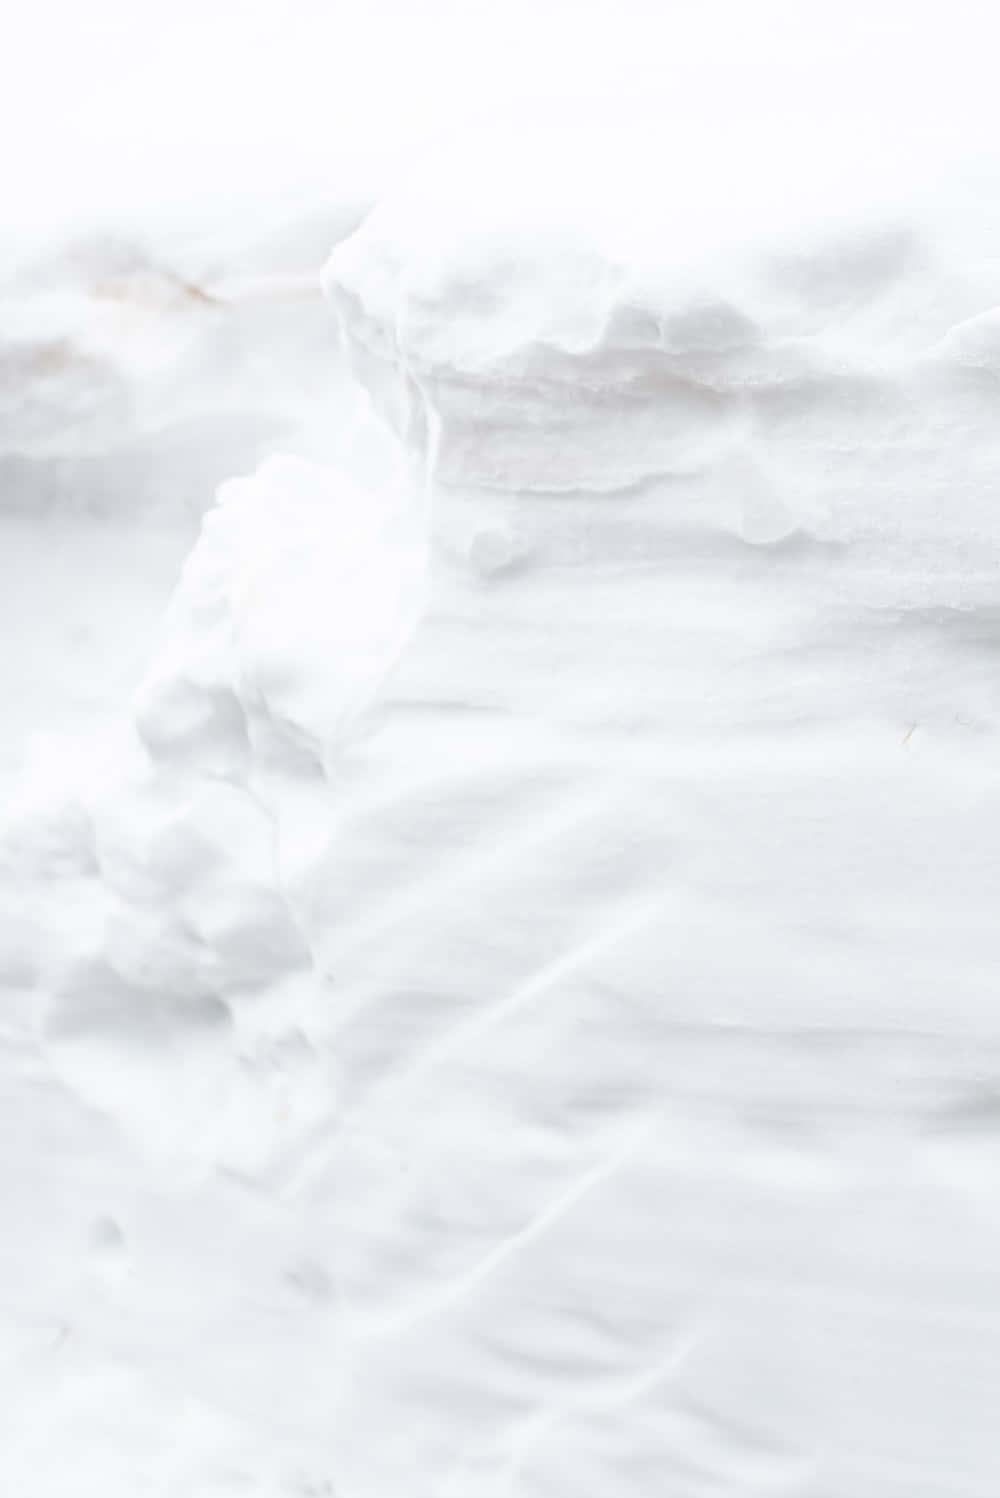 Soft White Aesthetic Texture Wallpaper